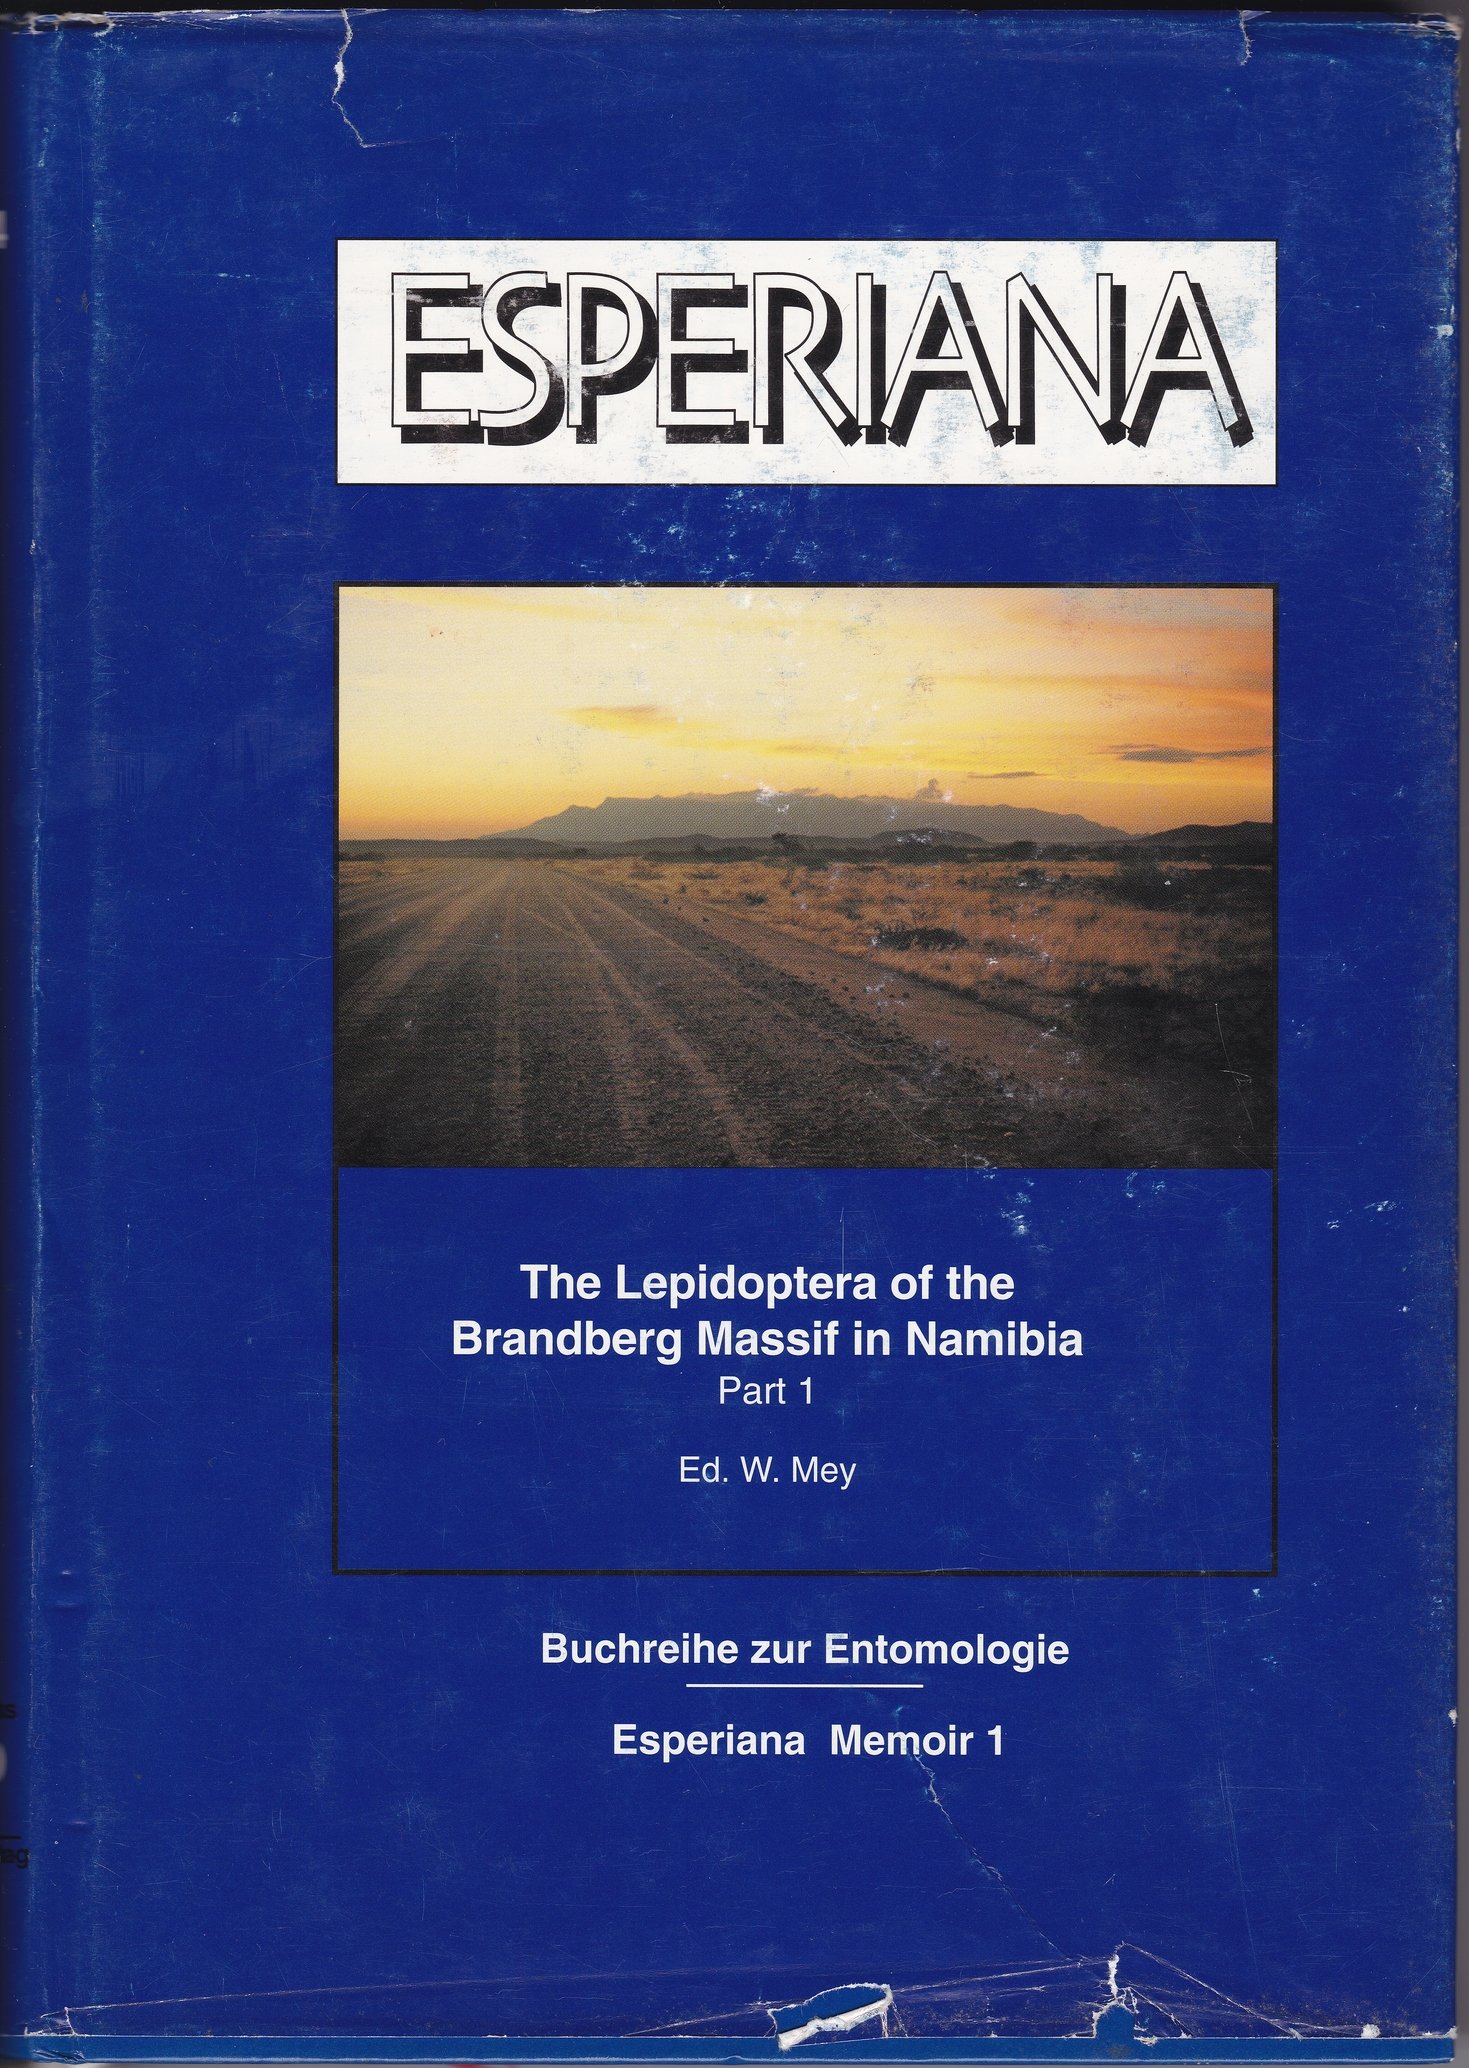 Esperiana Memoir 2004/1. kötet - The Lepidoptera of the Brandberg Massif in Namibia Part 1 (Rippl-Rónai Múzeum CC BY-NC-ND)